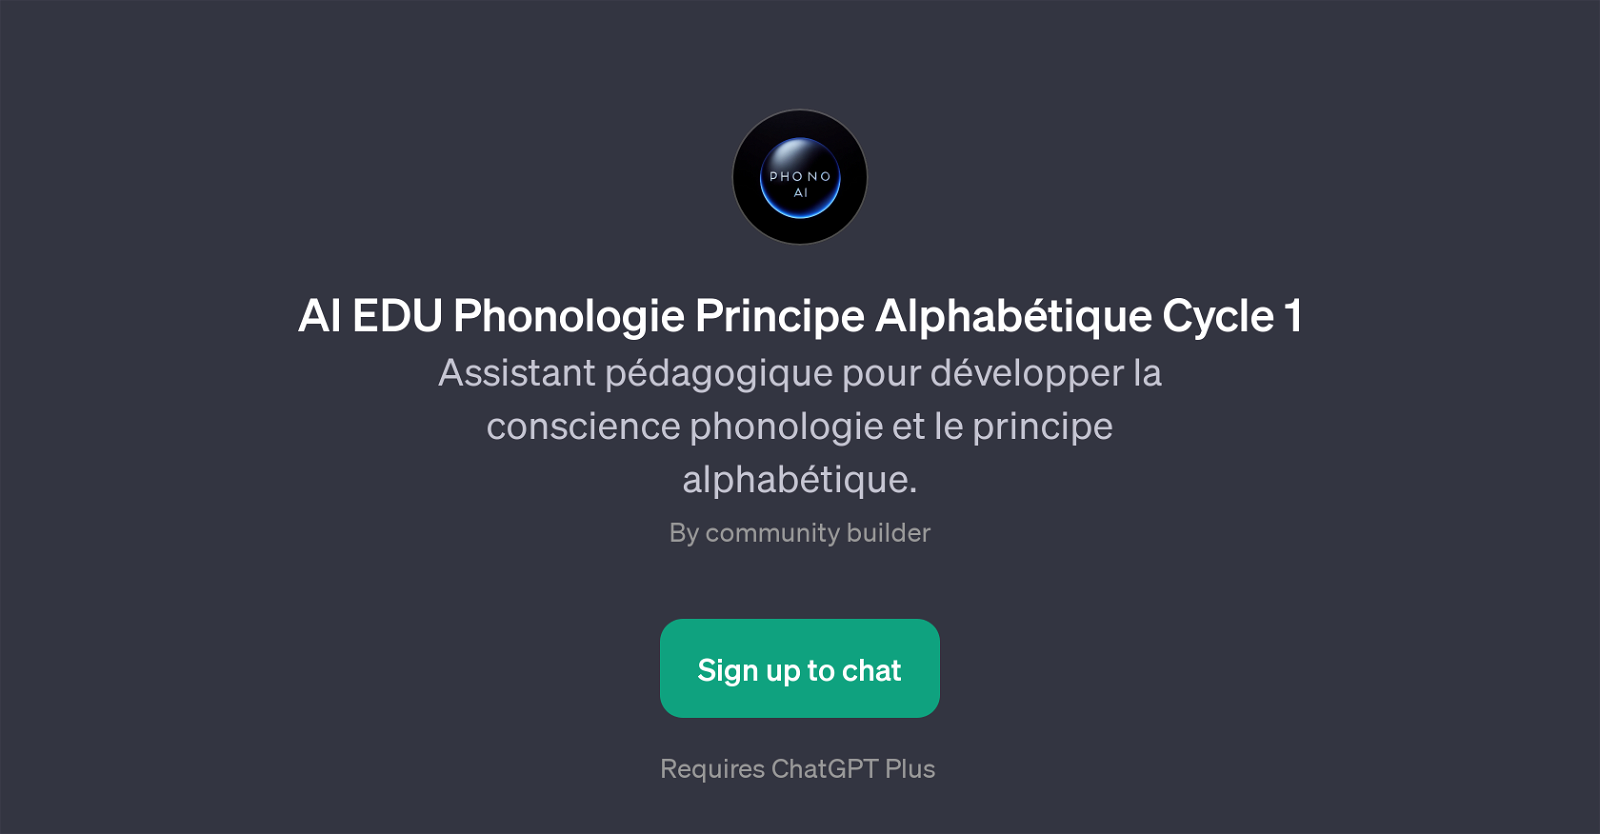 AI EDU Phonologie Principe Alphabtique Cycle 1 website